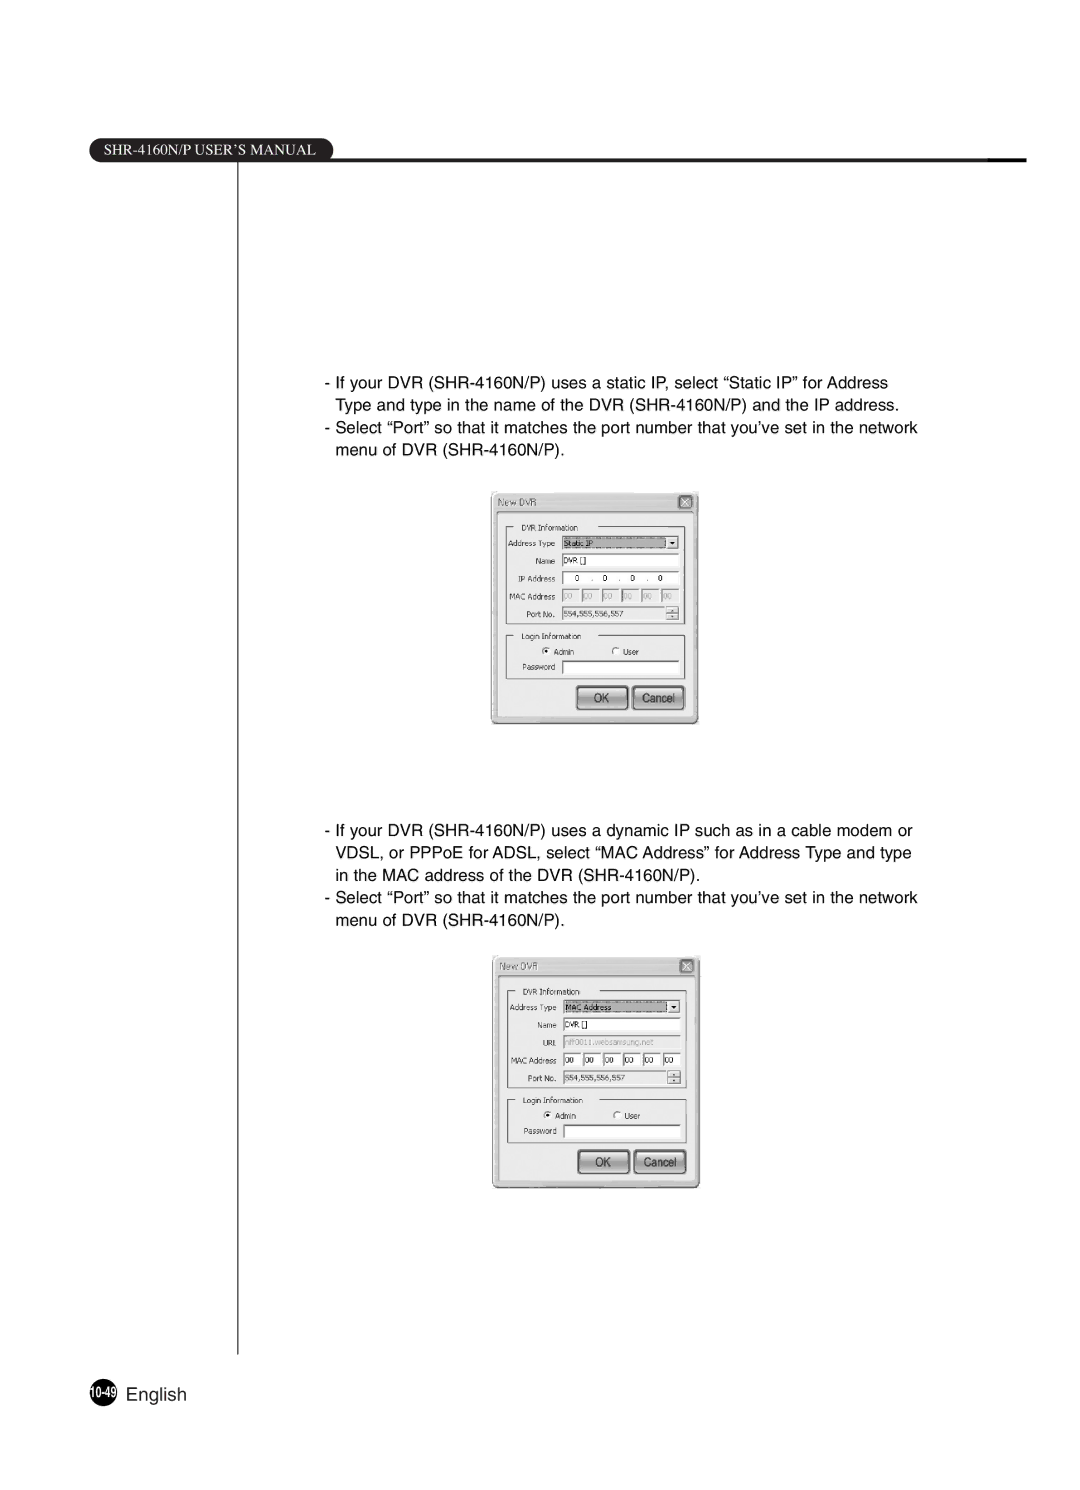 Samsung SHR-4160P manual 10-49English 